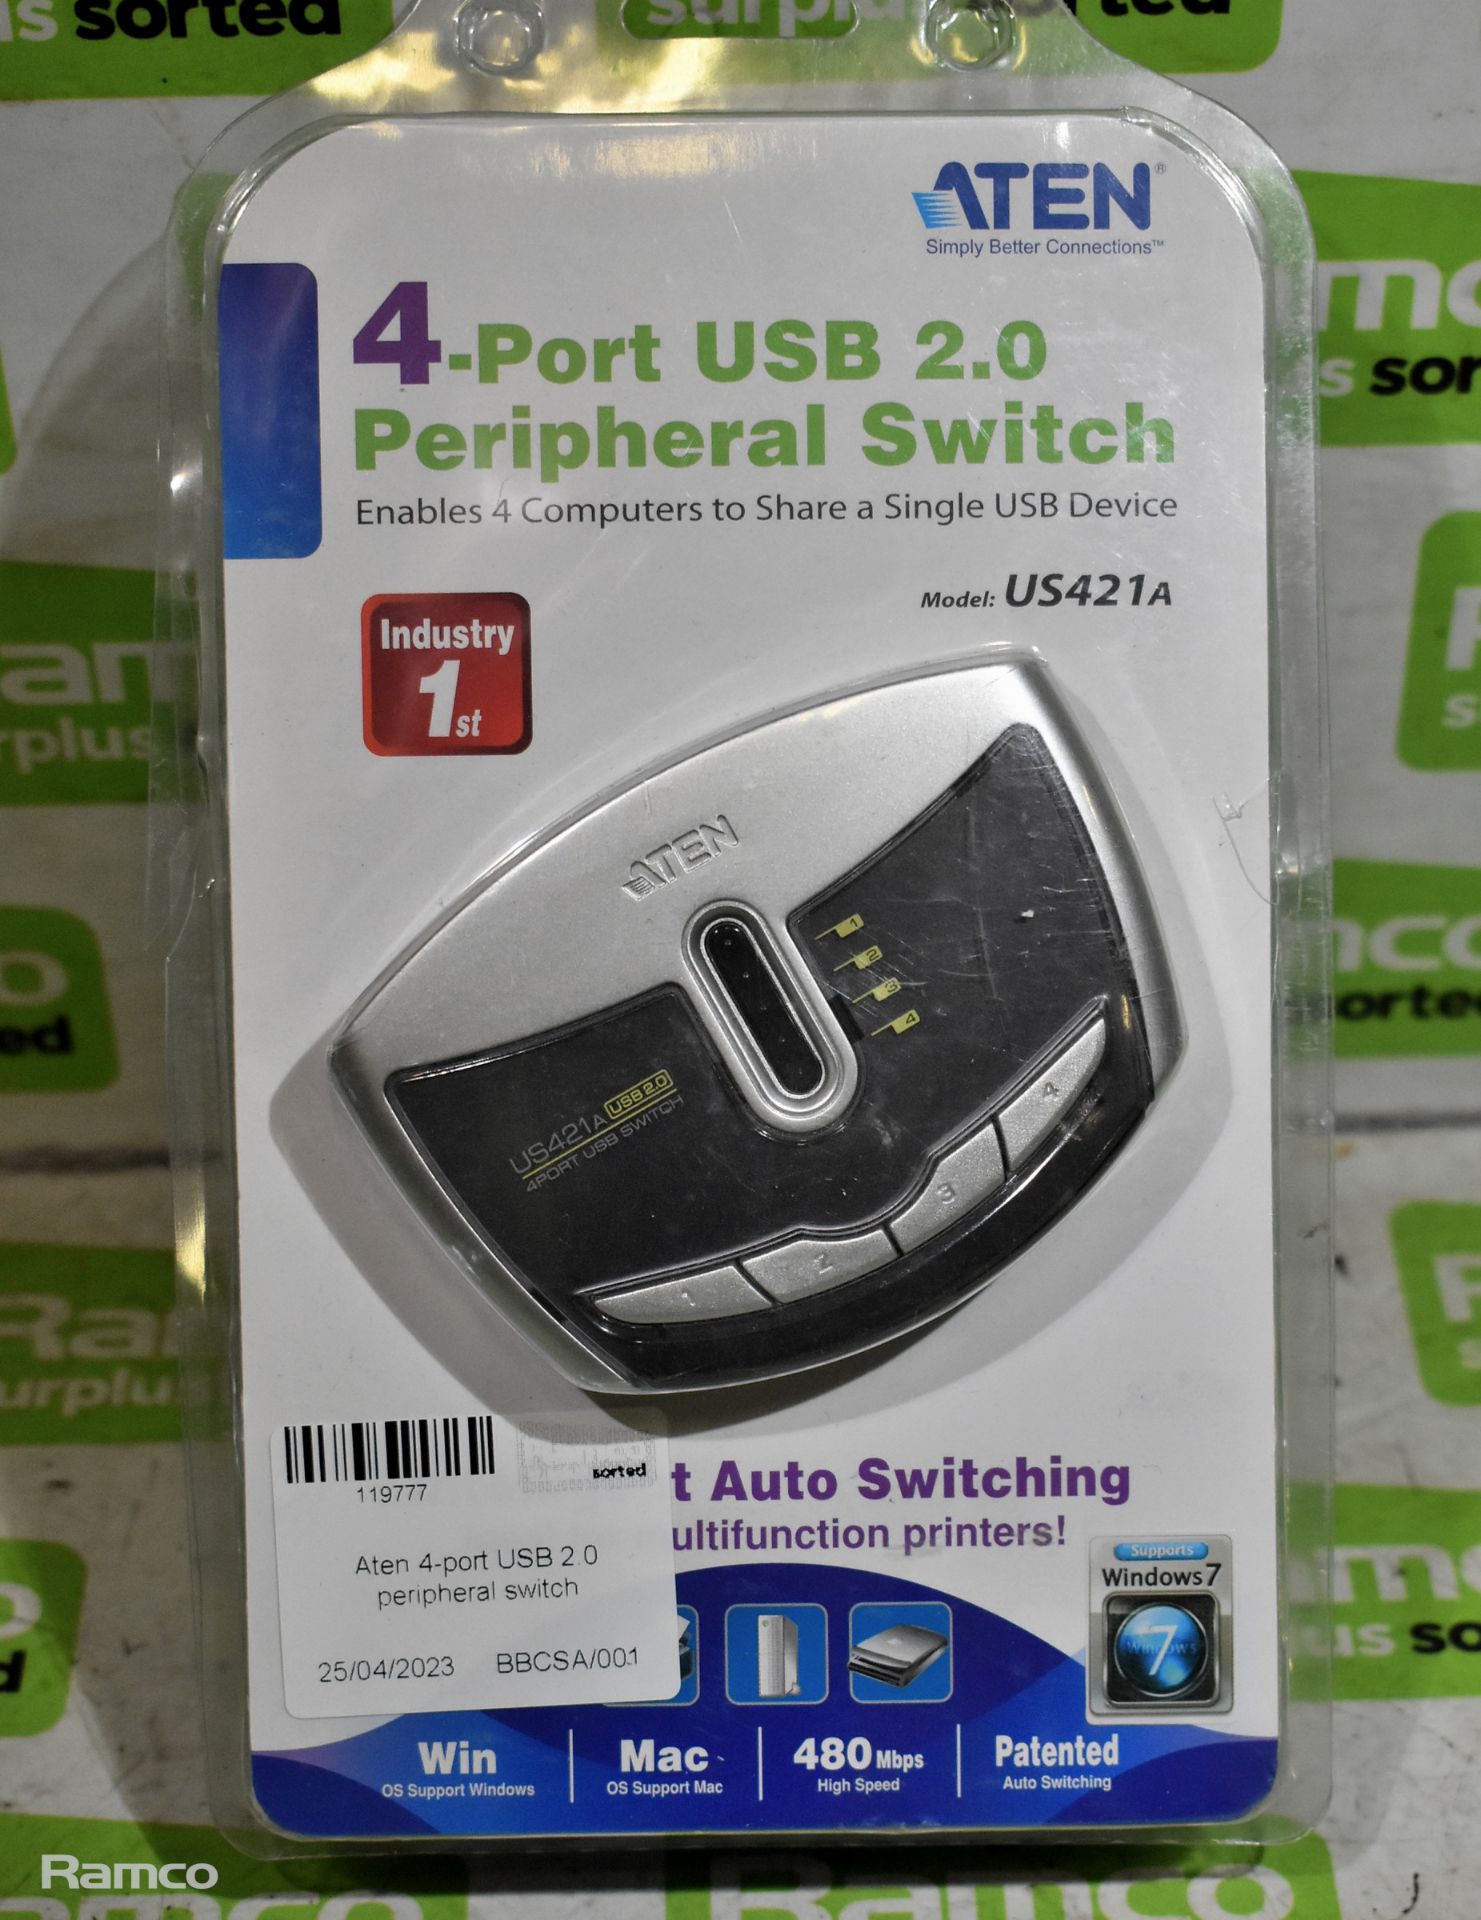 Aten 4-port USB 2.0 peripheral switch